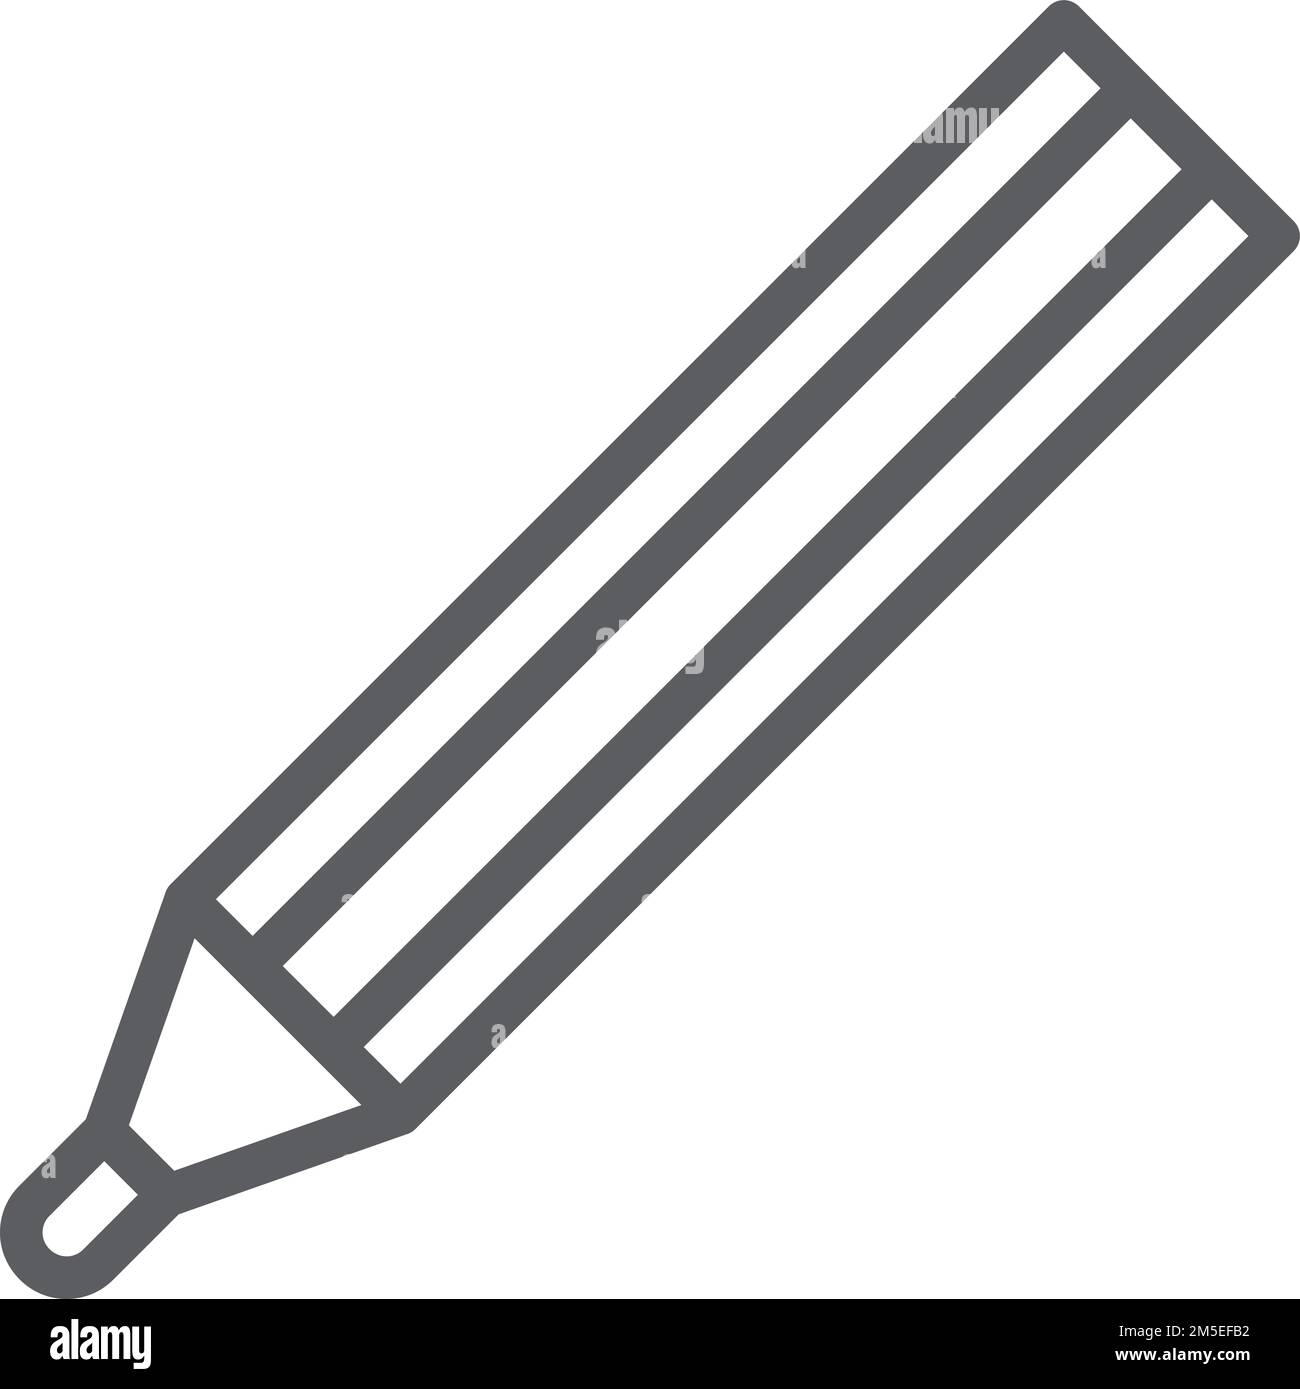 Pencil icon. Drawing tool black line symbol Stock Vector